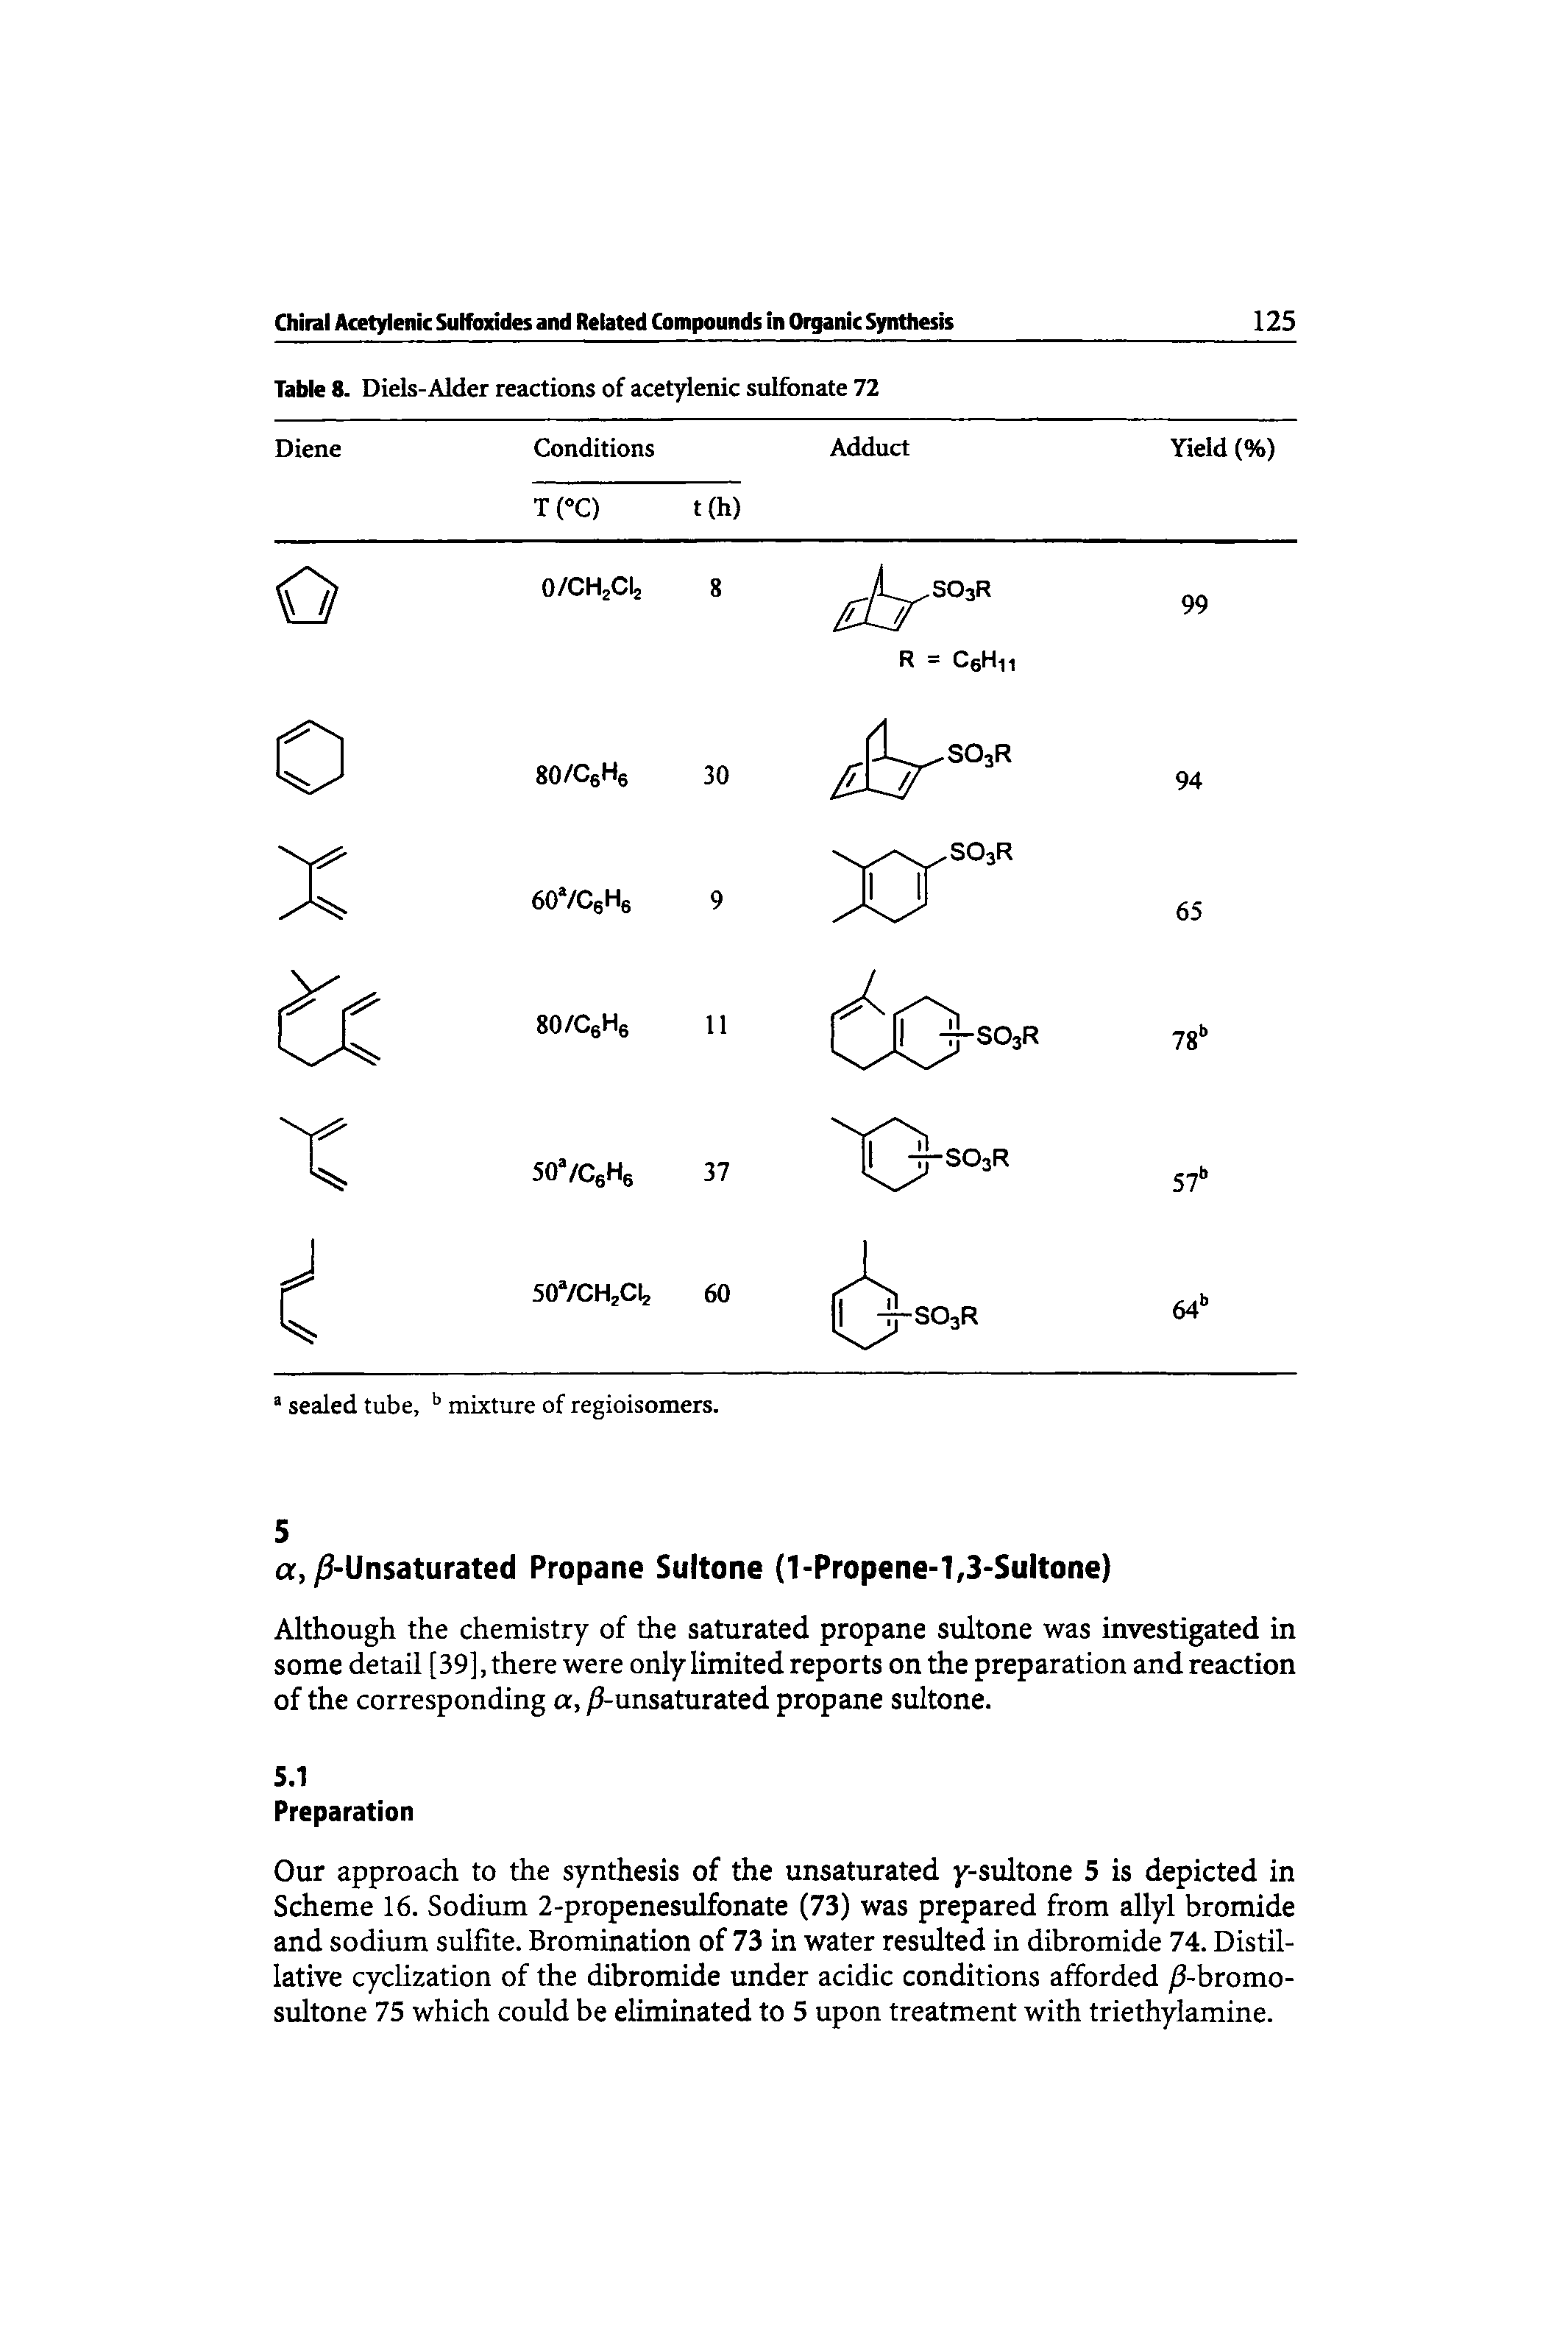 Table 8. Diels-Alder reactions of acetylenic sulfonate 72...